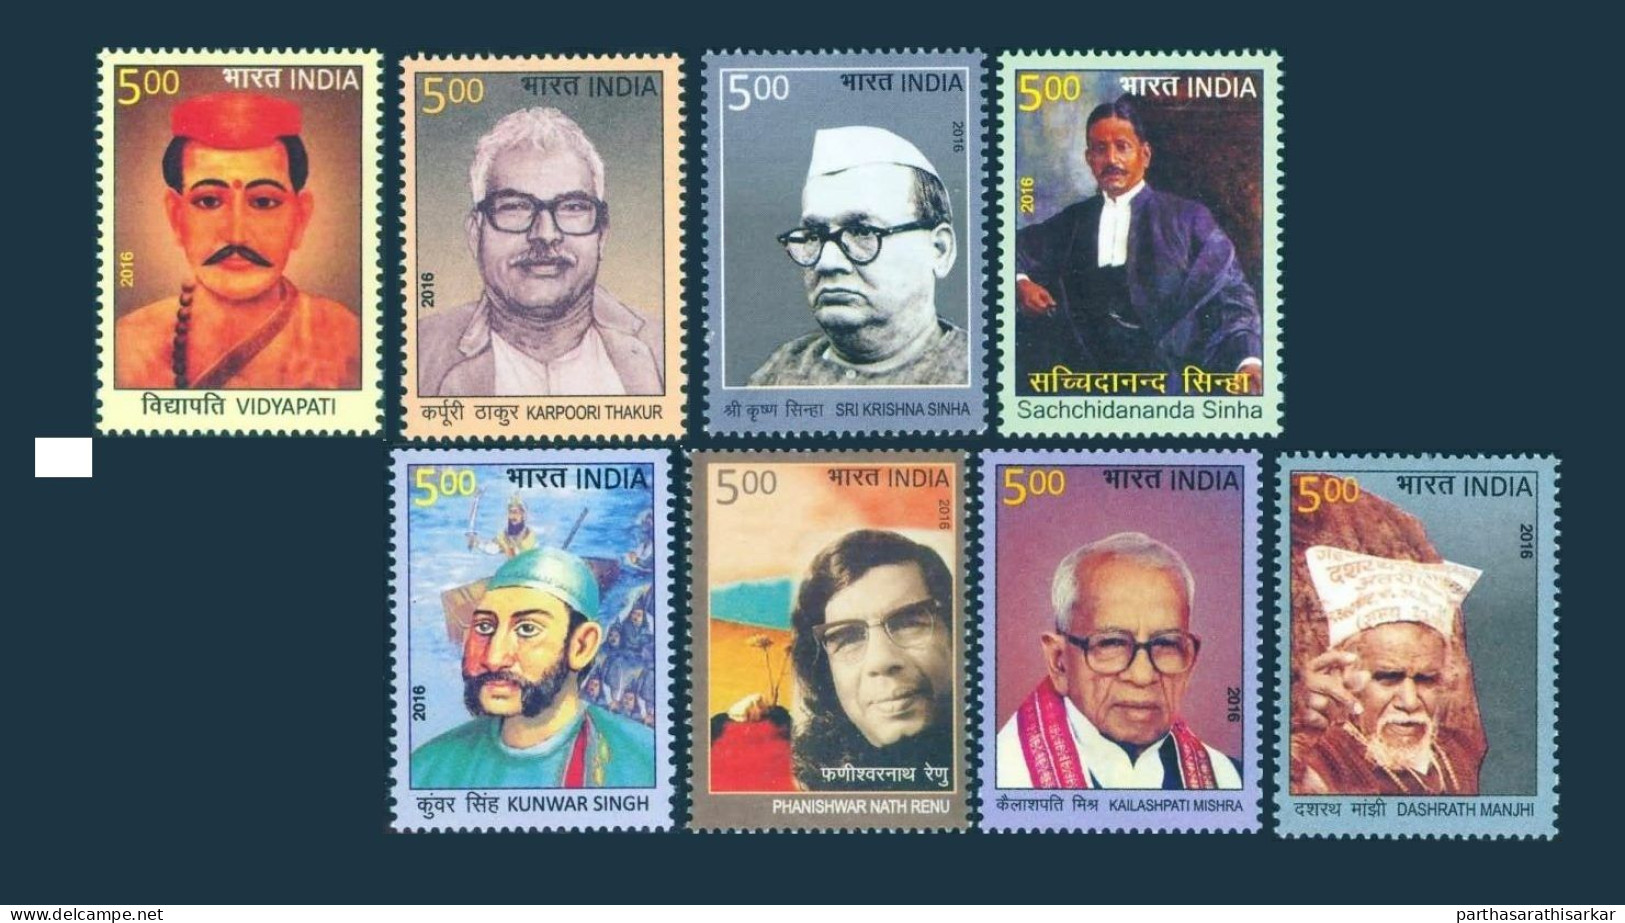 INDIA 2016 PERSONALITIES OF BIHAR (BIHAR LUMINARIES) COMPLETE SET OF 8V STAMPS MNH - Unused Stamps